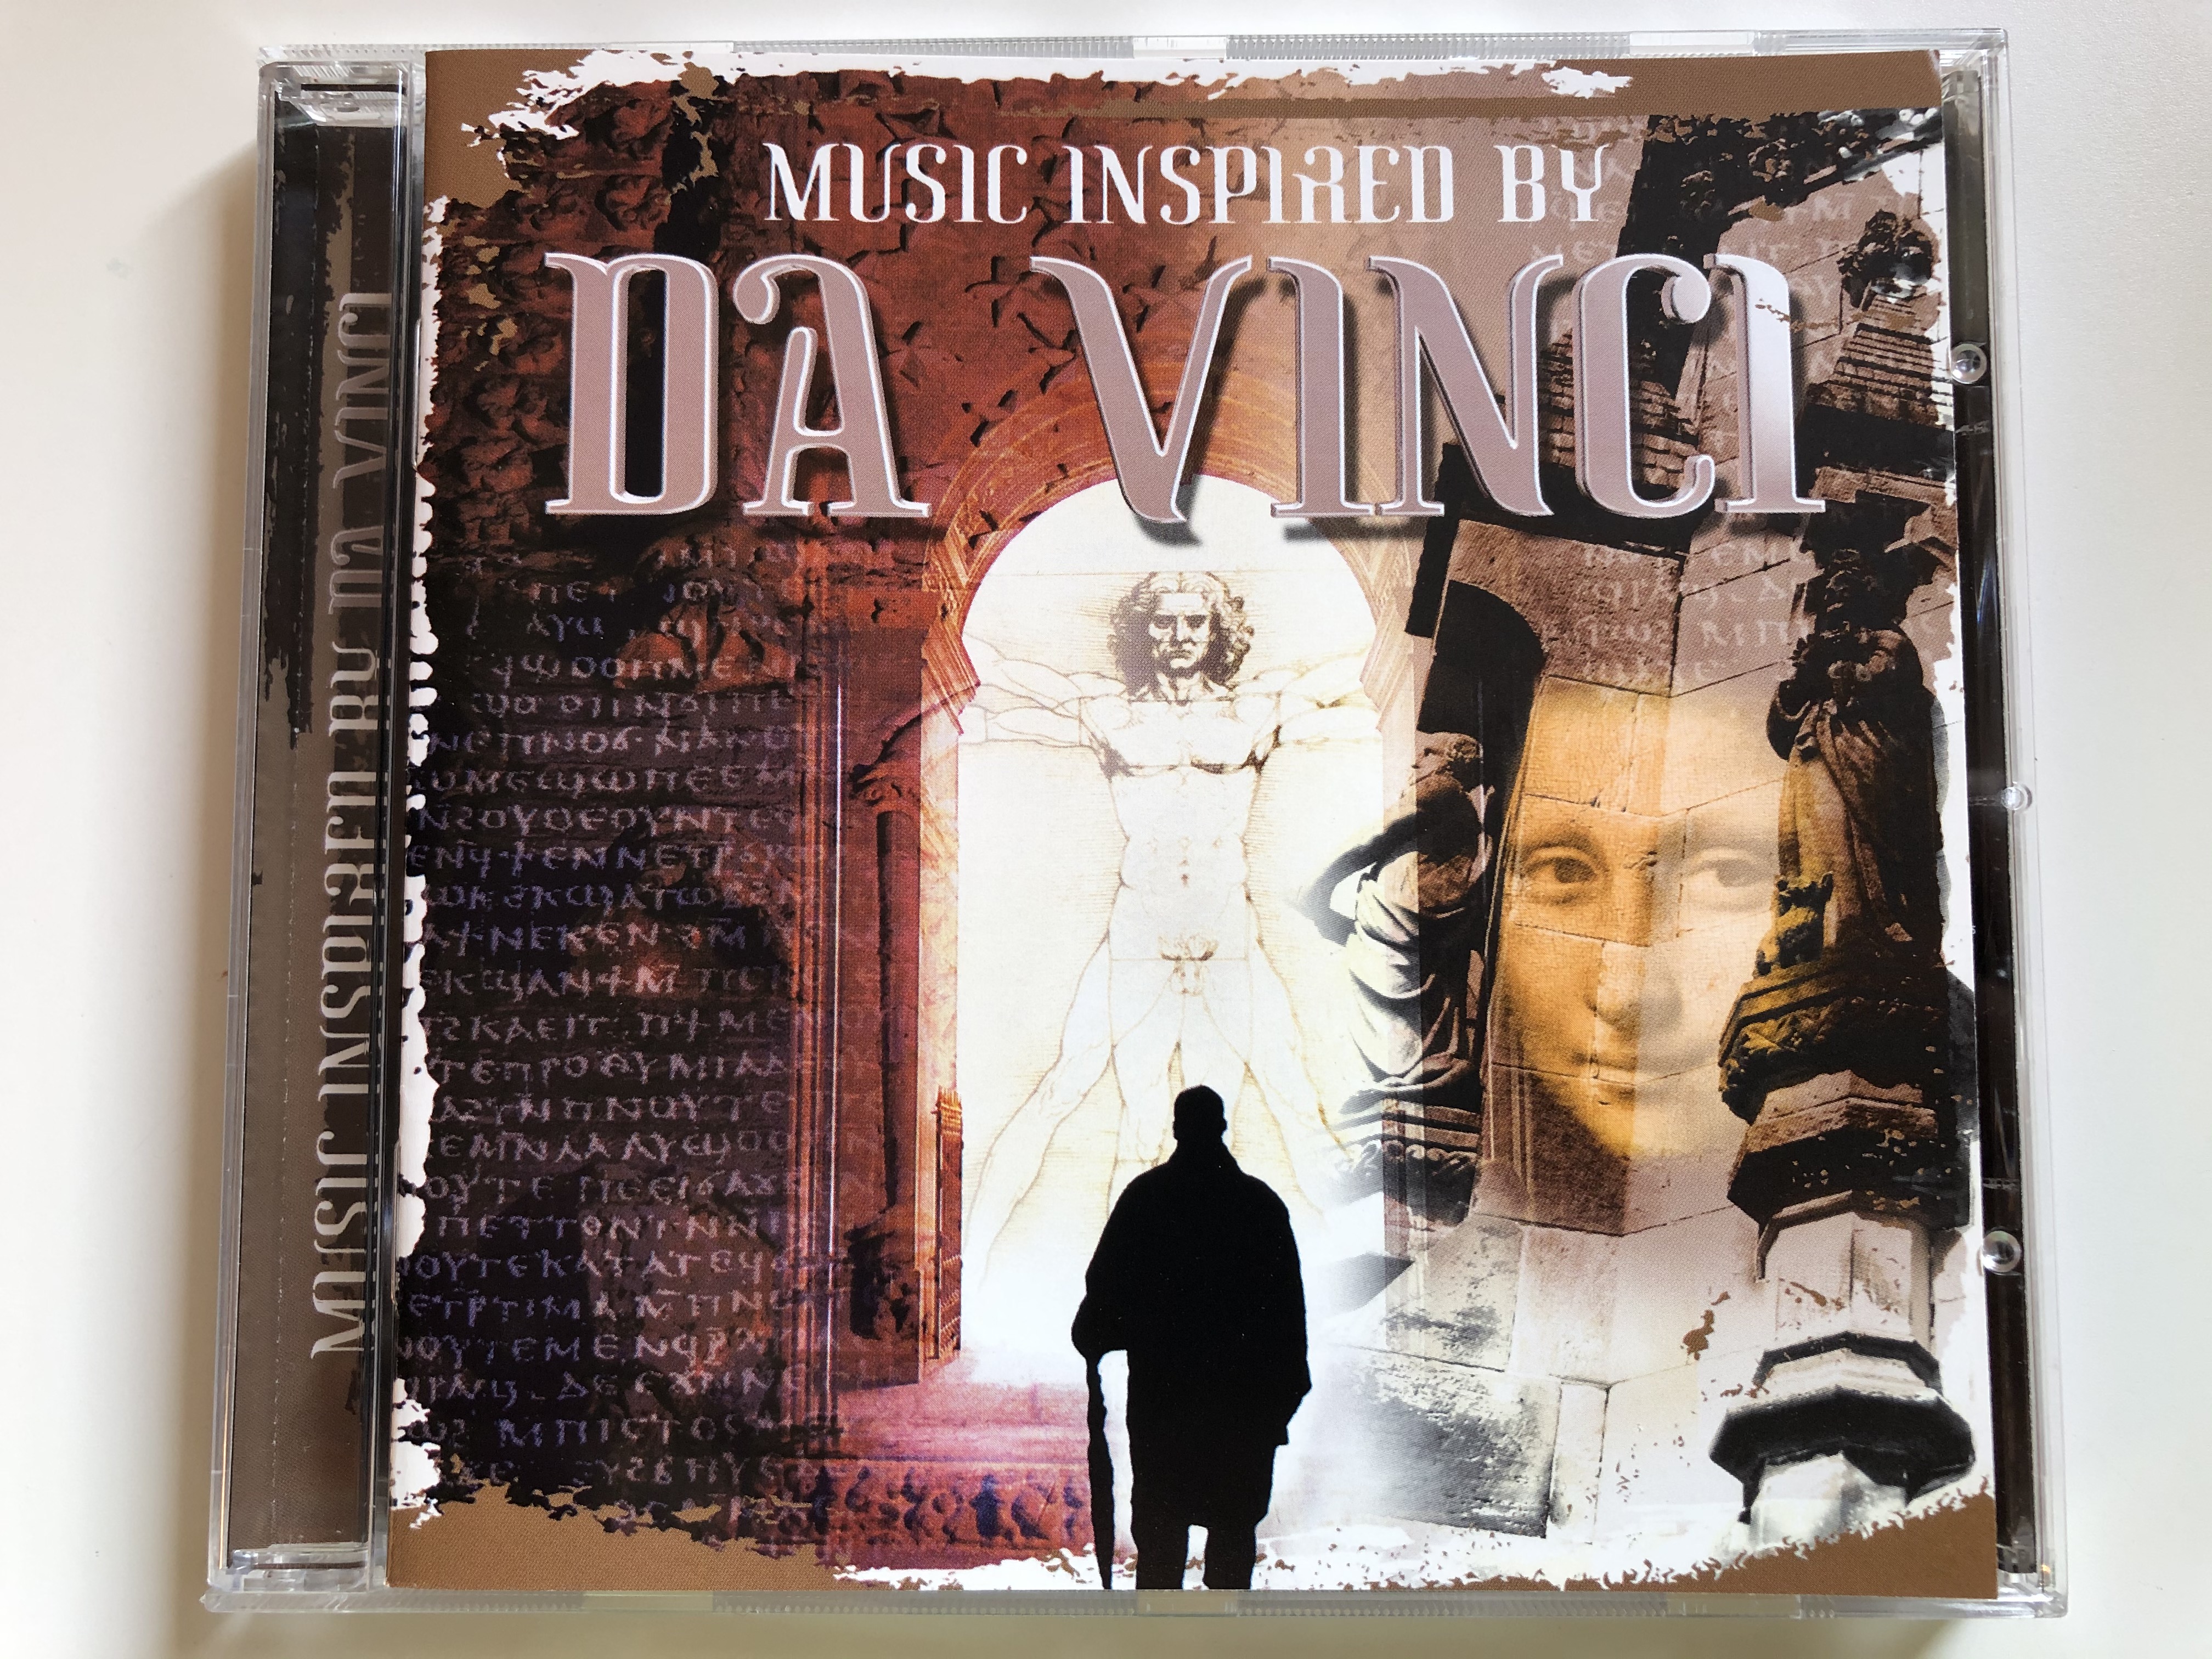 music-inspired-by-da-vinci-sony-bmg-music-entertainment-audio-cd-2006-82876822362-1-.jpg